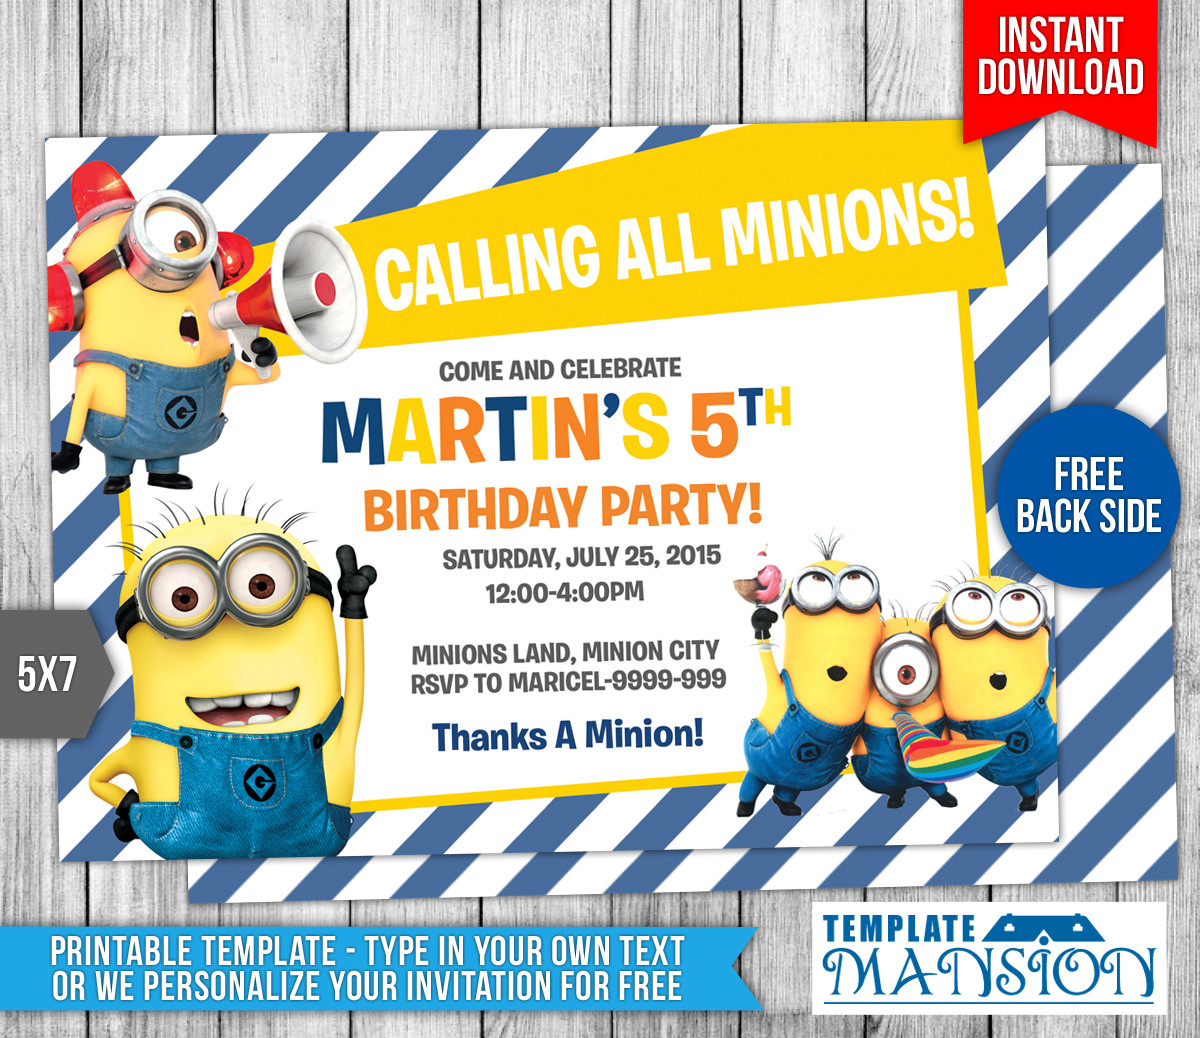 Minions Birthday Invitations Free
 Minions Birthday Invitation 7 by templatemansion on